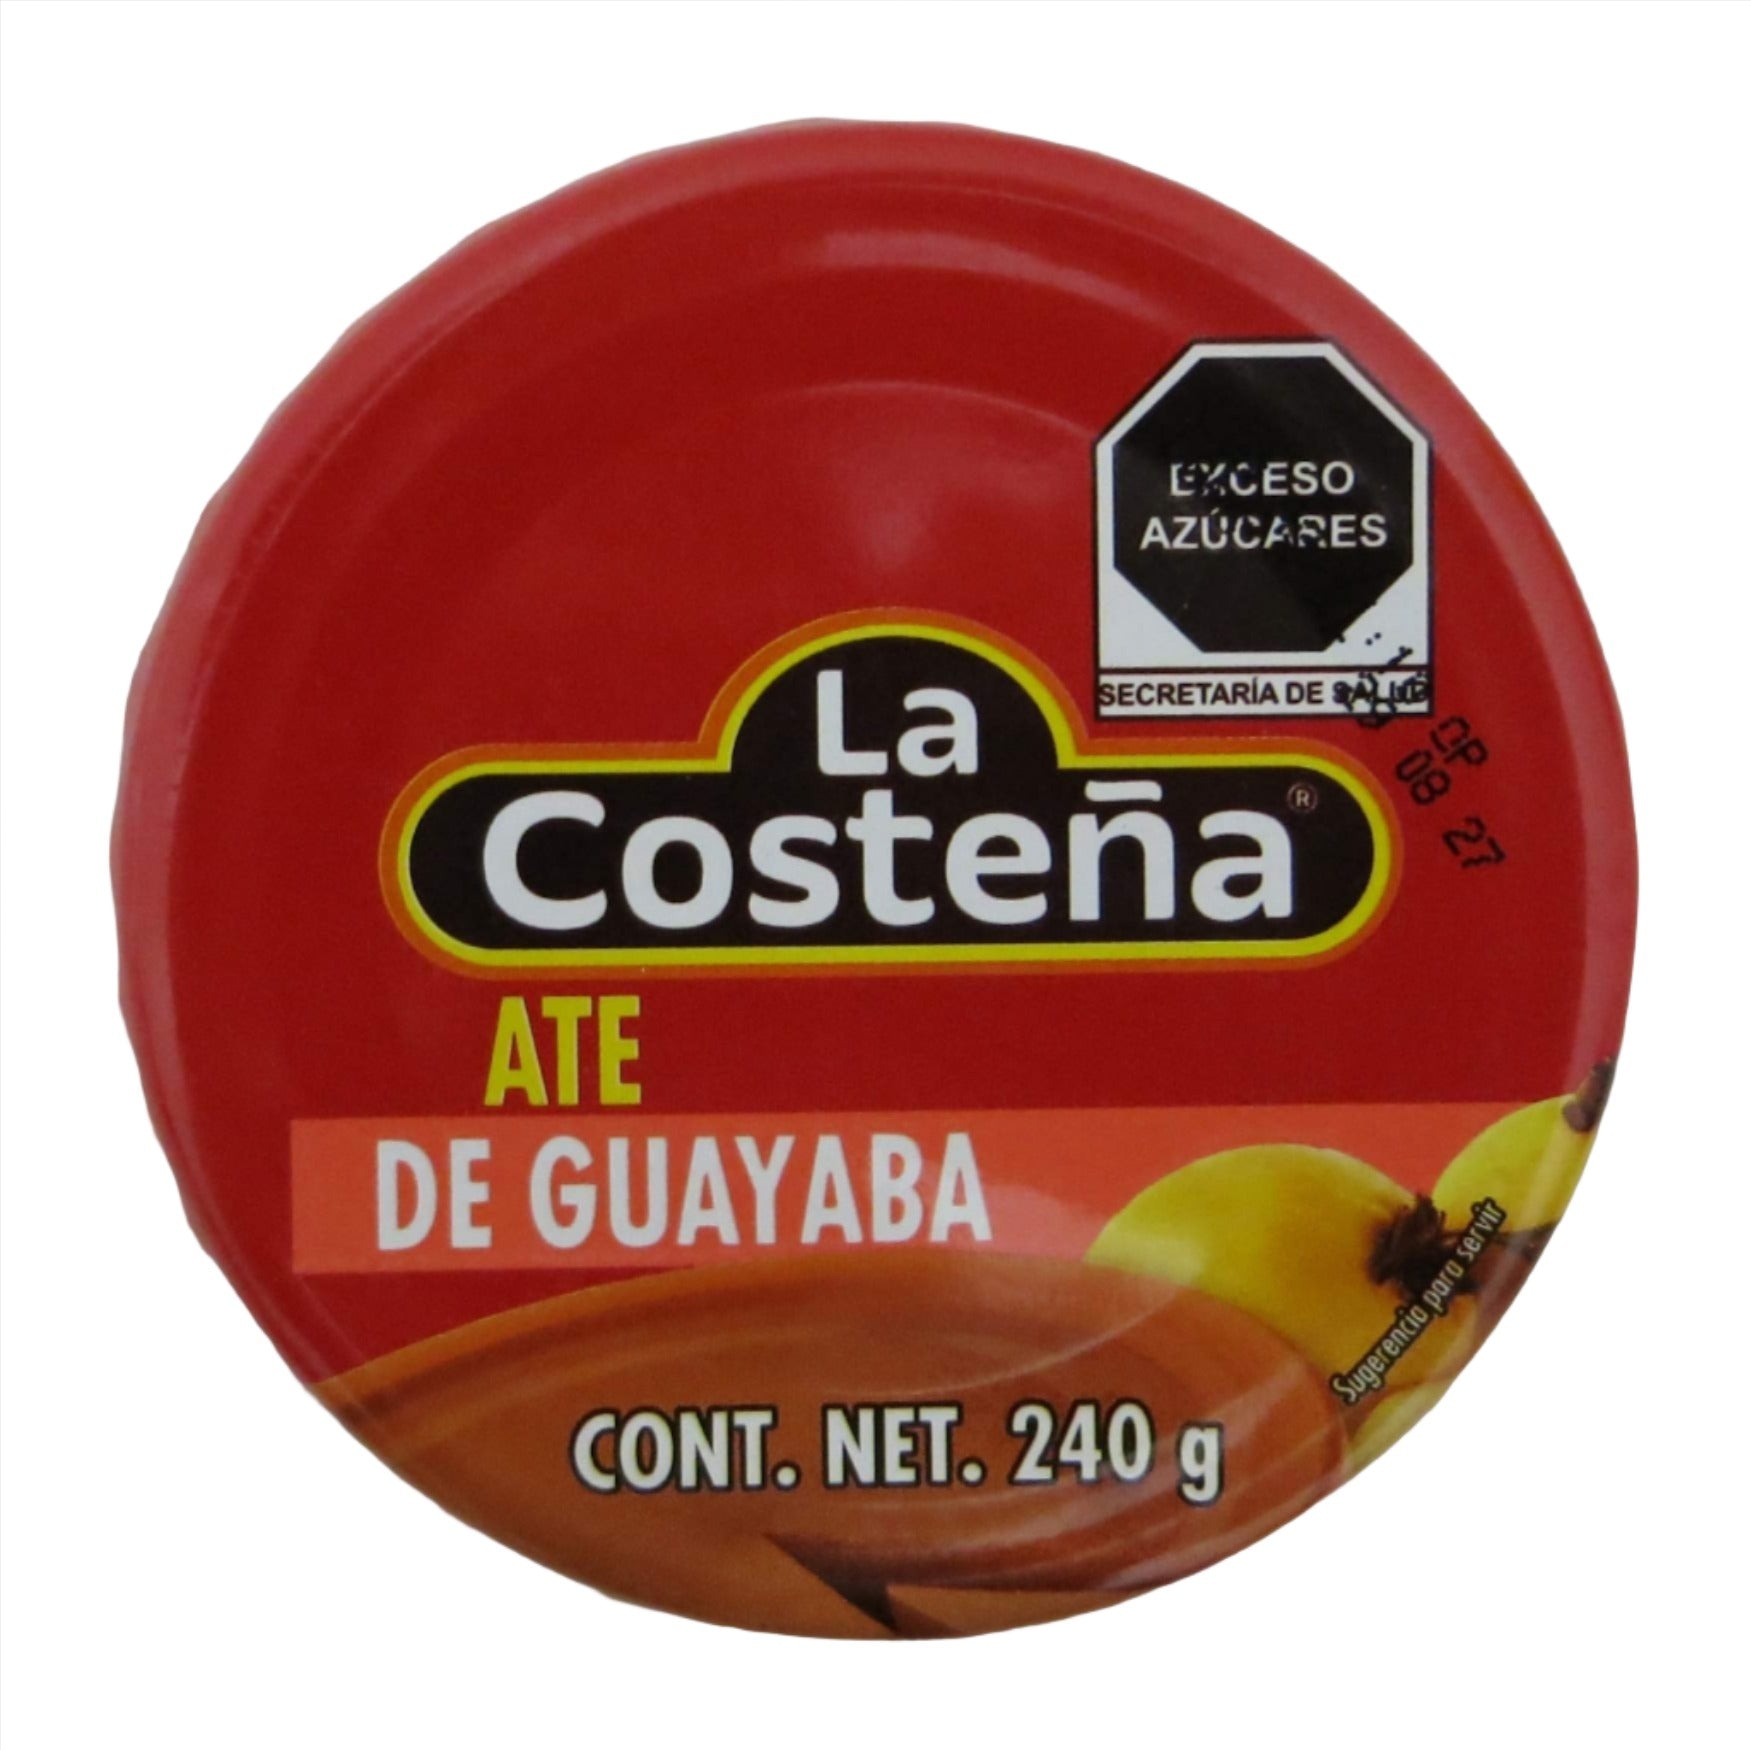 La Costena Ate de Guayaba 240g - Worldster Markt e.K.